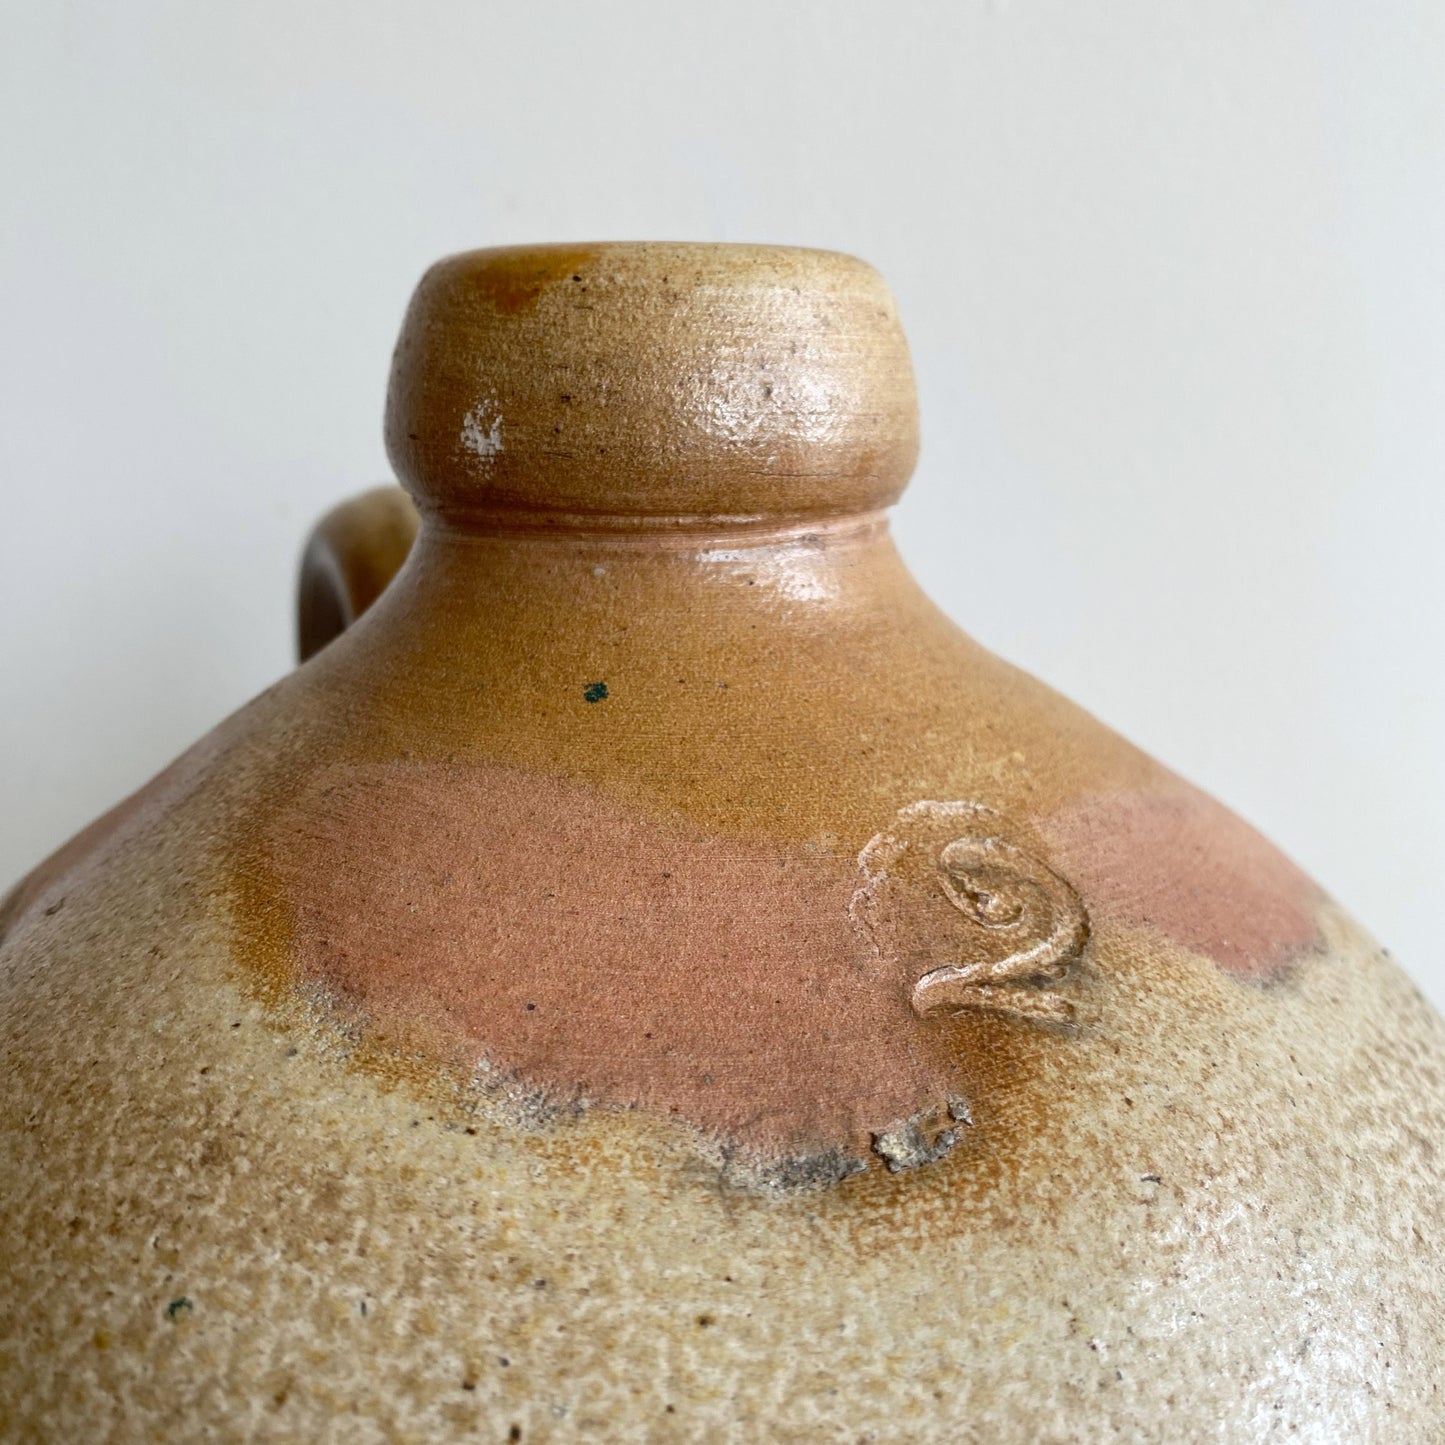 Giant Antique Salt Glaze Stoneware Jug, 15"